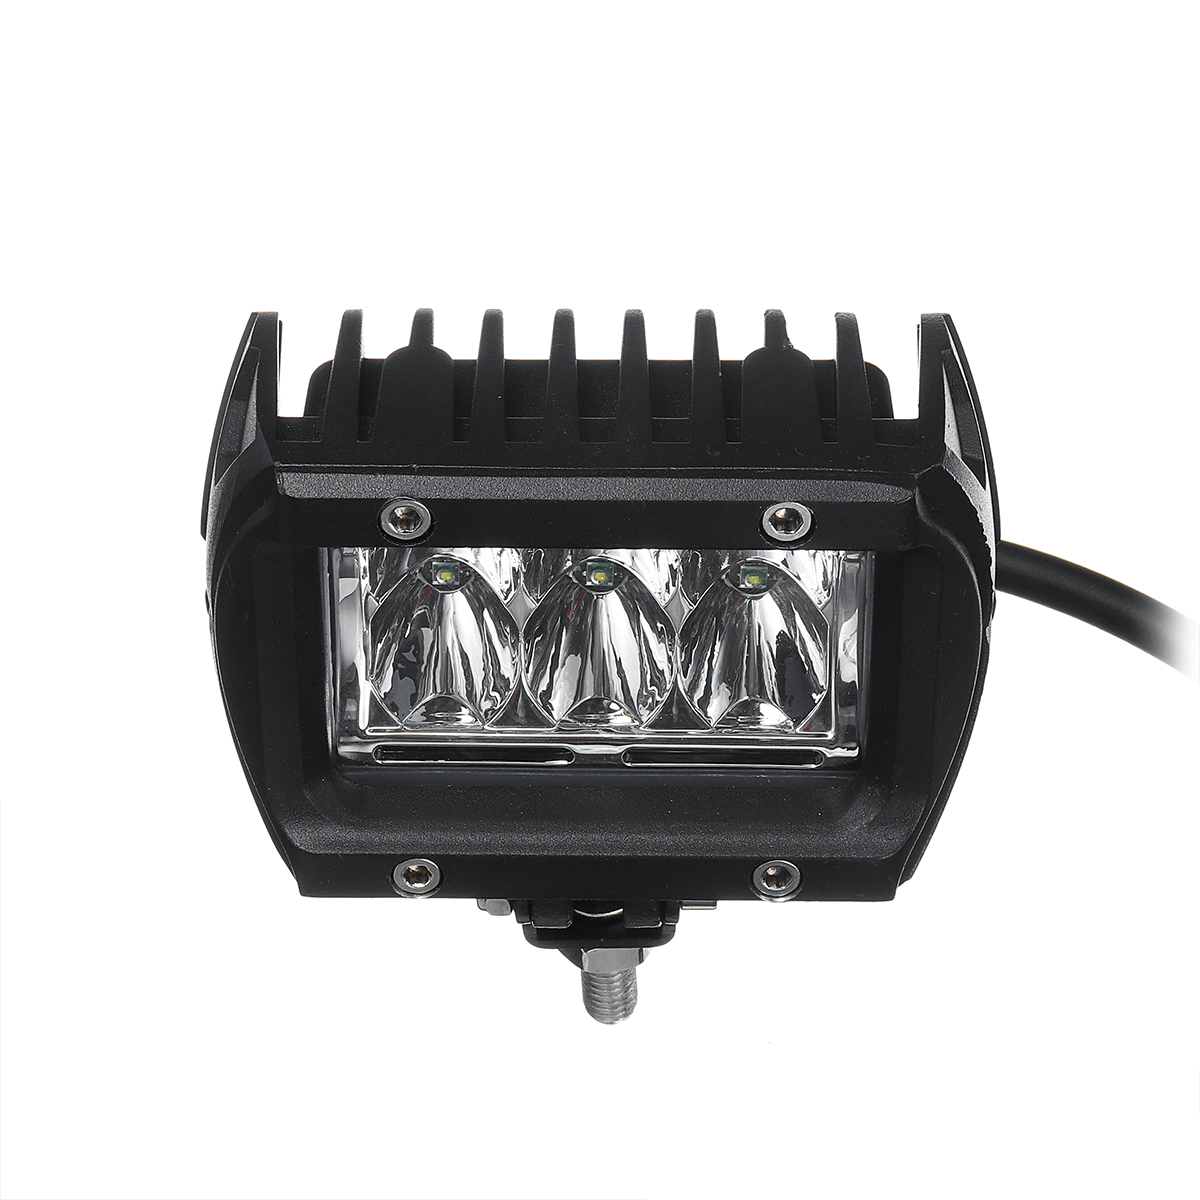 4-Inch-60W-LED-Work-Light-Bar-Spot-Flood-Combo-Beam-Offroad-Car-Truck-Boat-Driving-Lamp-1621121-9